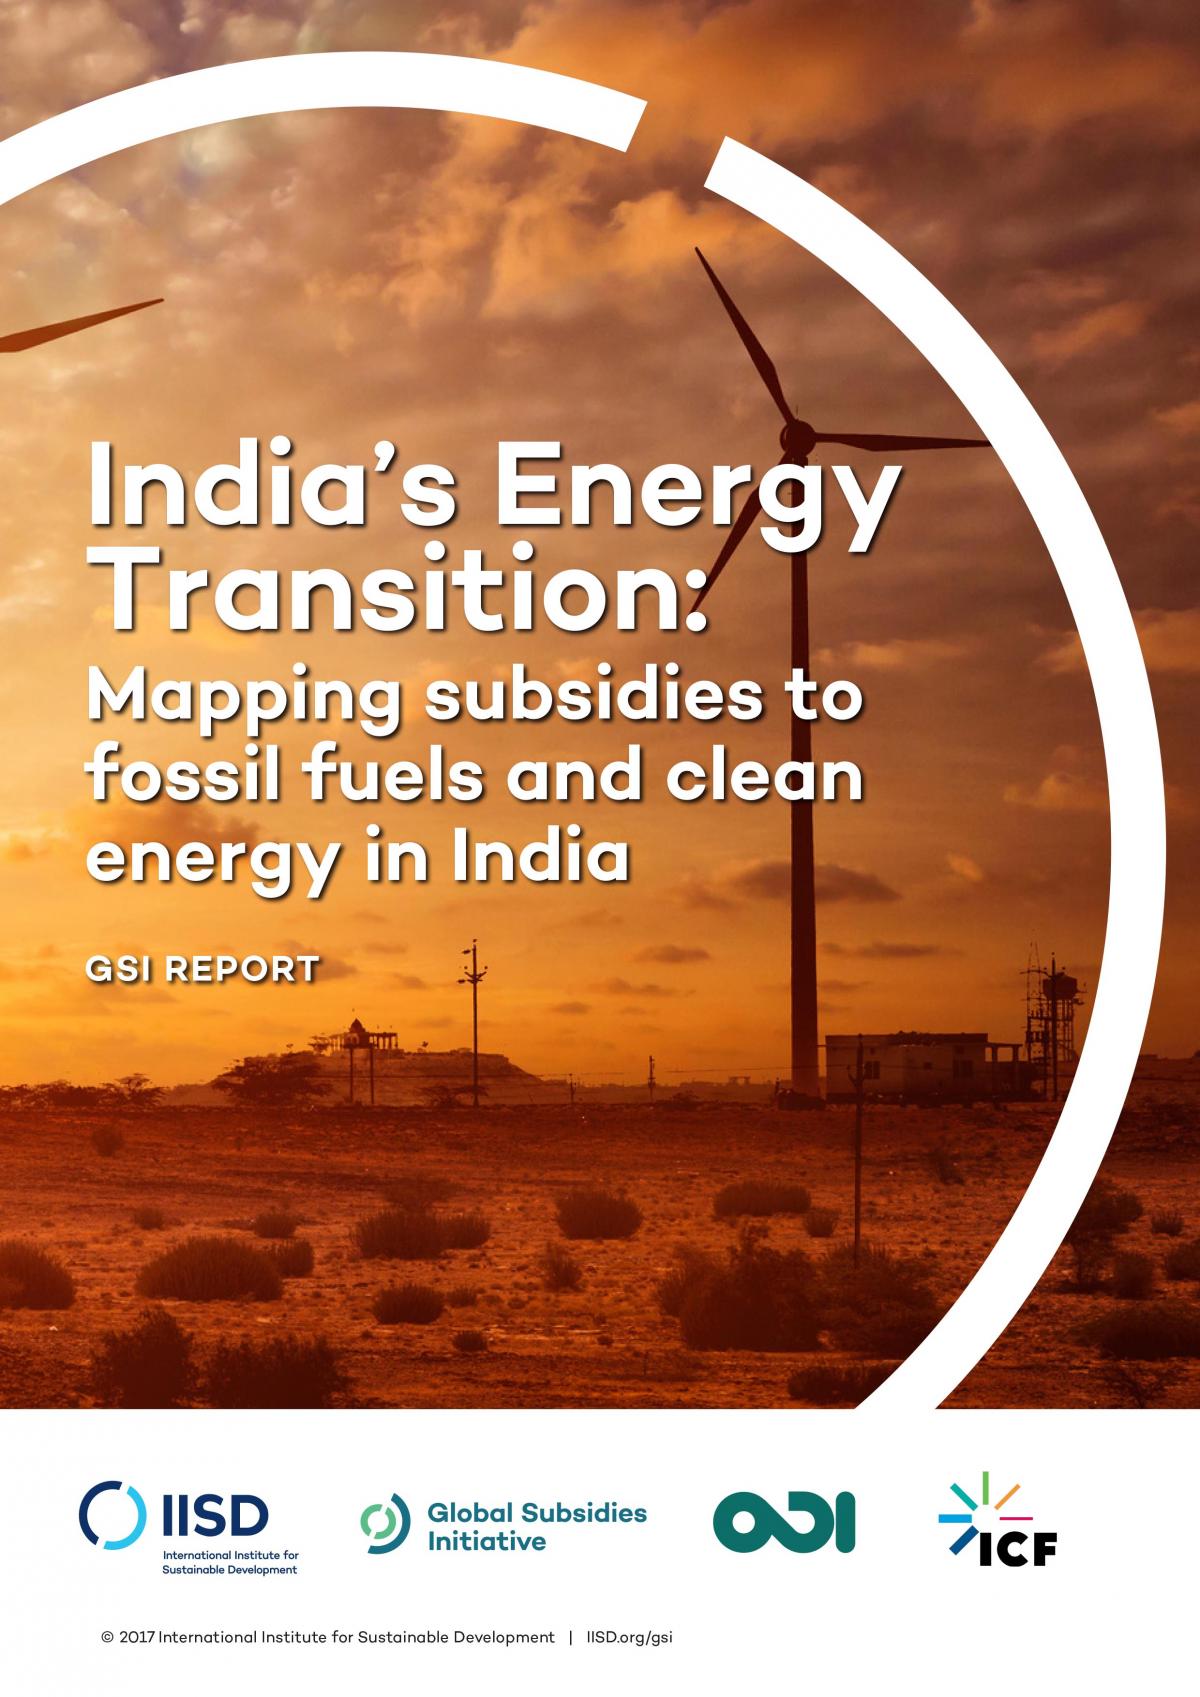 phd in energy economics in india